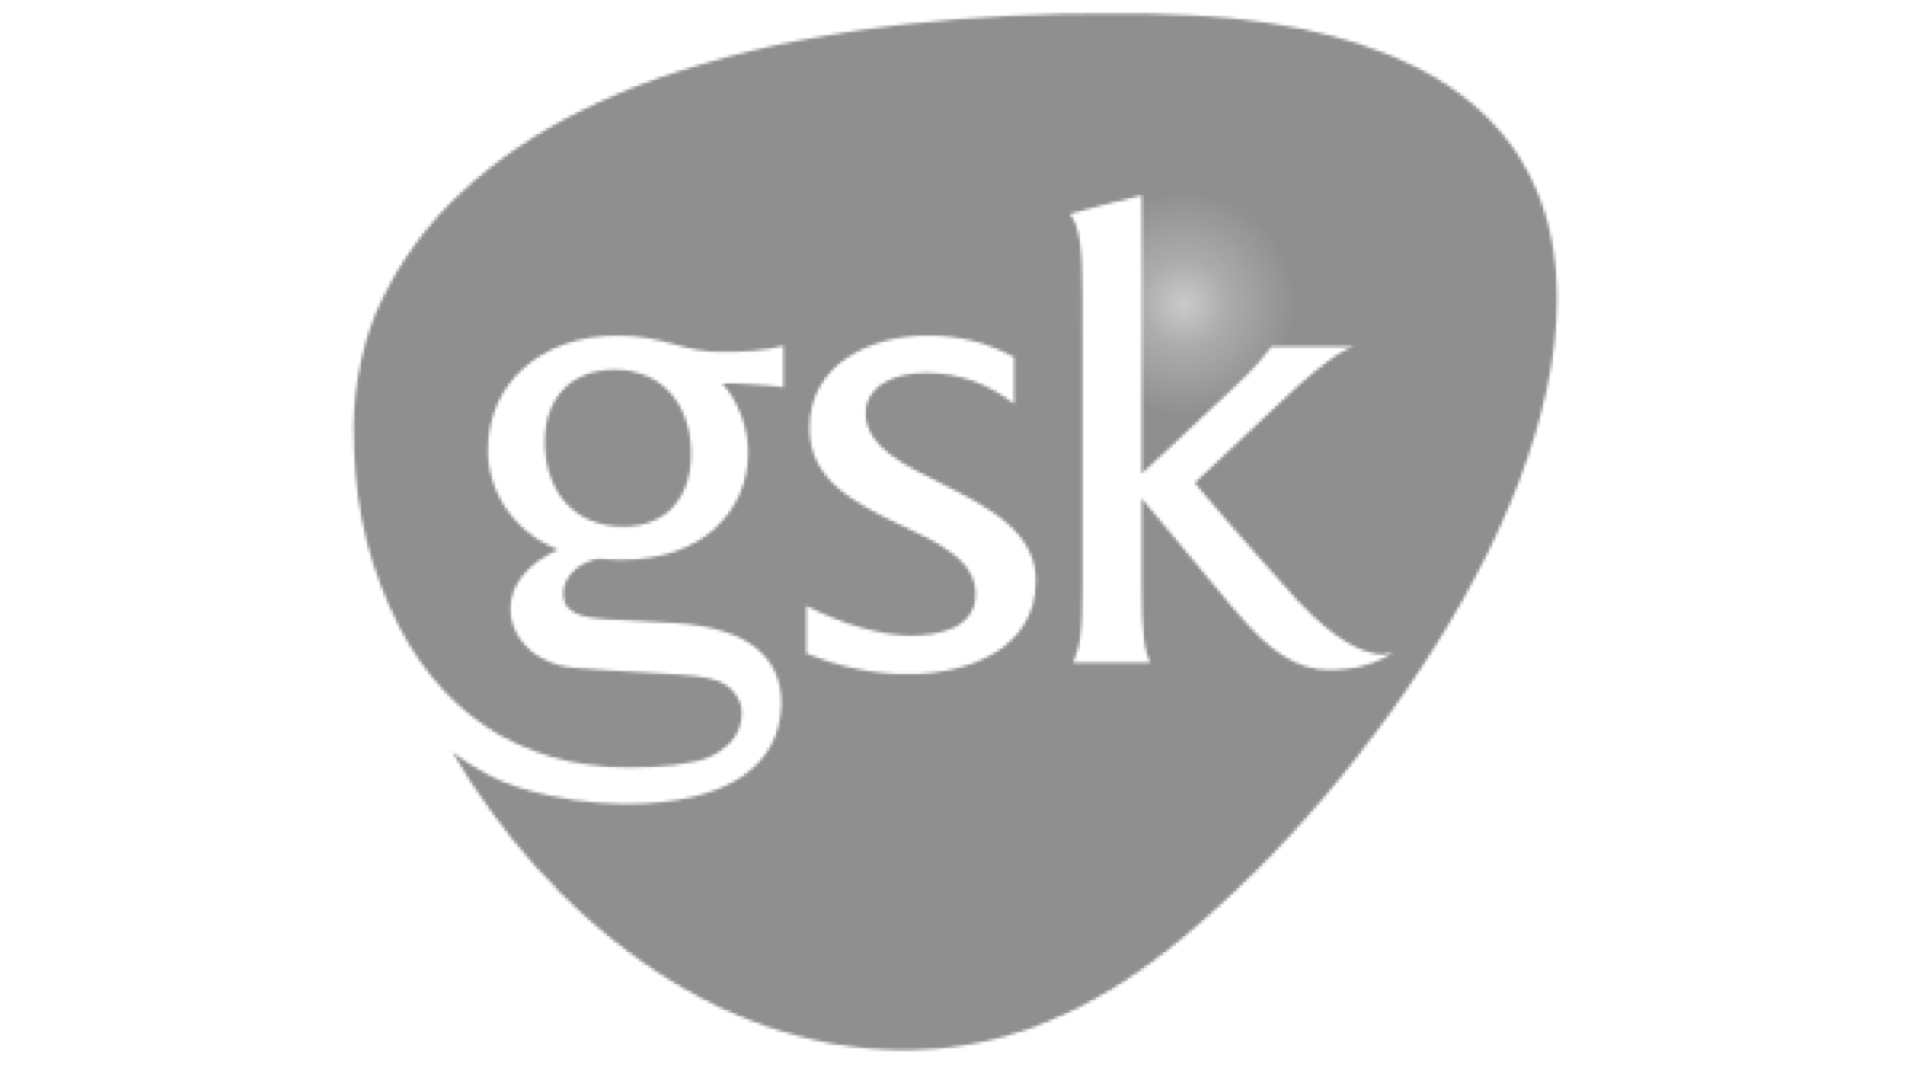 Gsk 980. Компания GSK. GSK logo. GSK фармацевтическая компания. GLAXOSMITHKLINE лого.